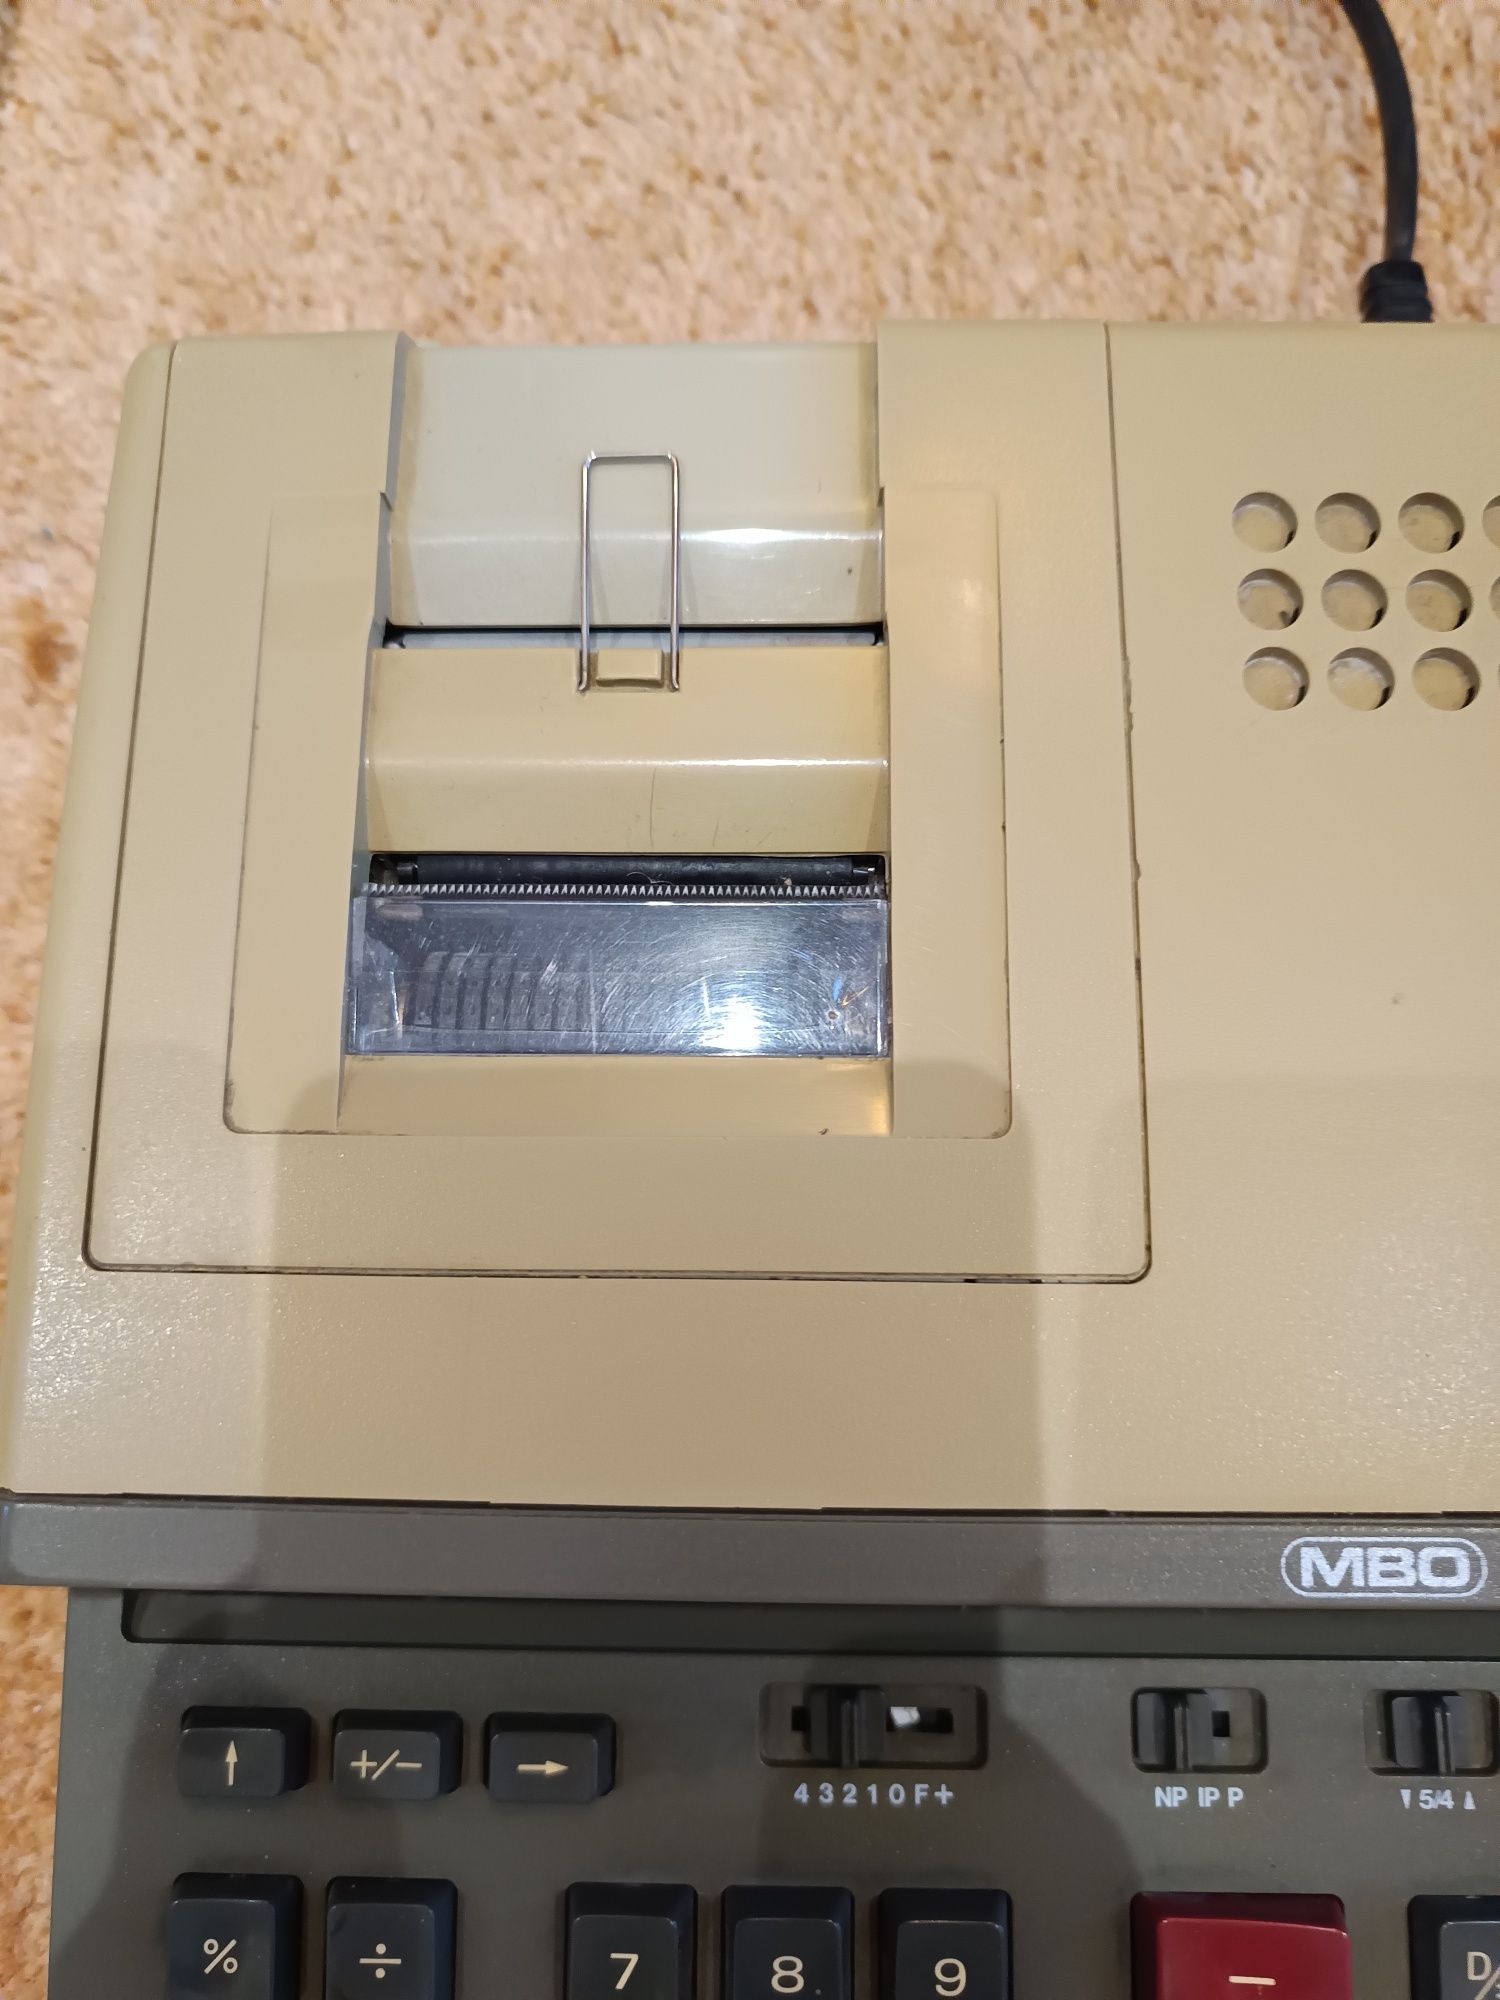 Calculadora Casio 1980 PD